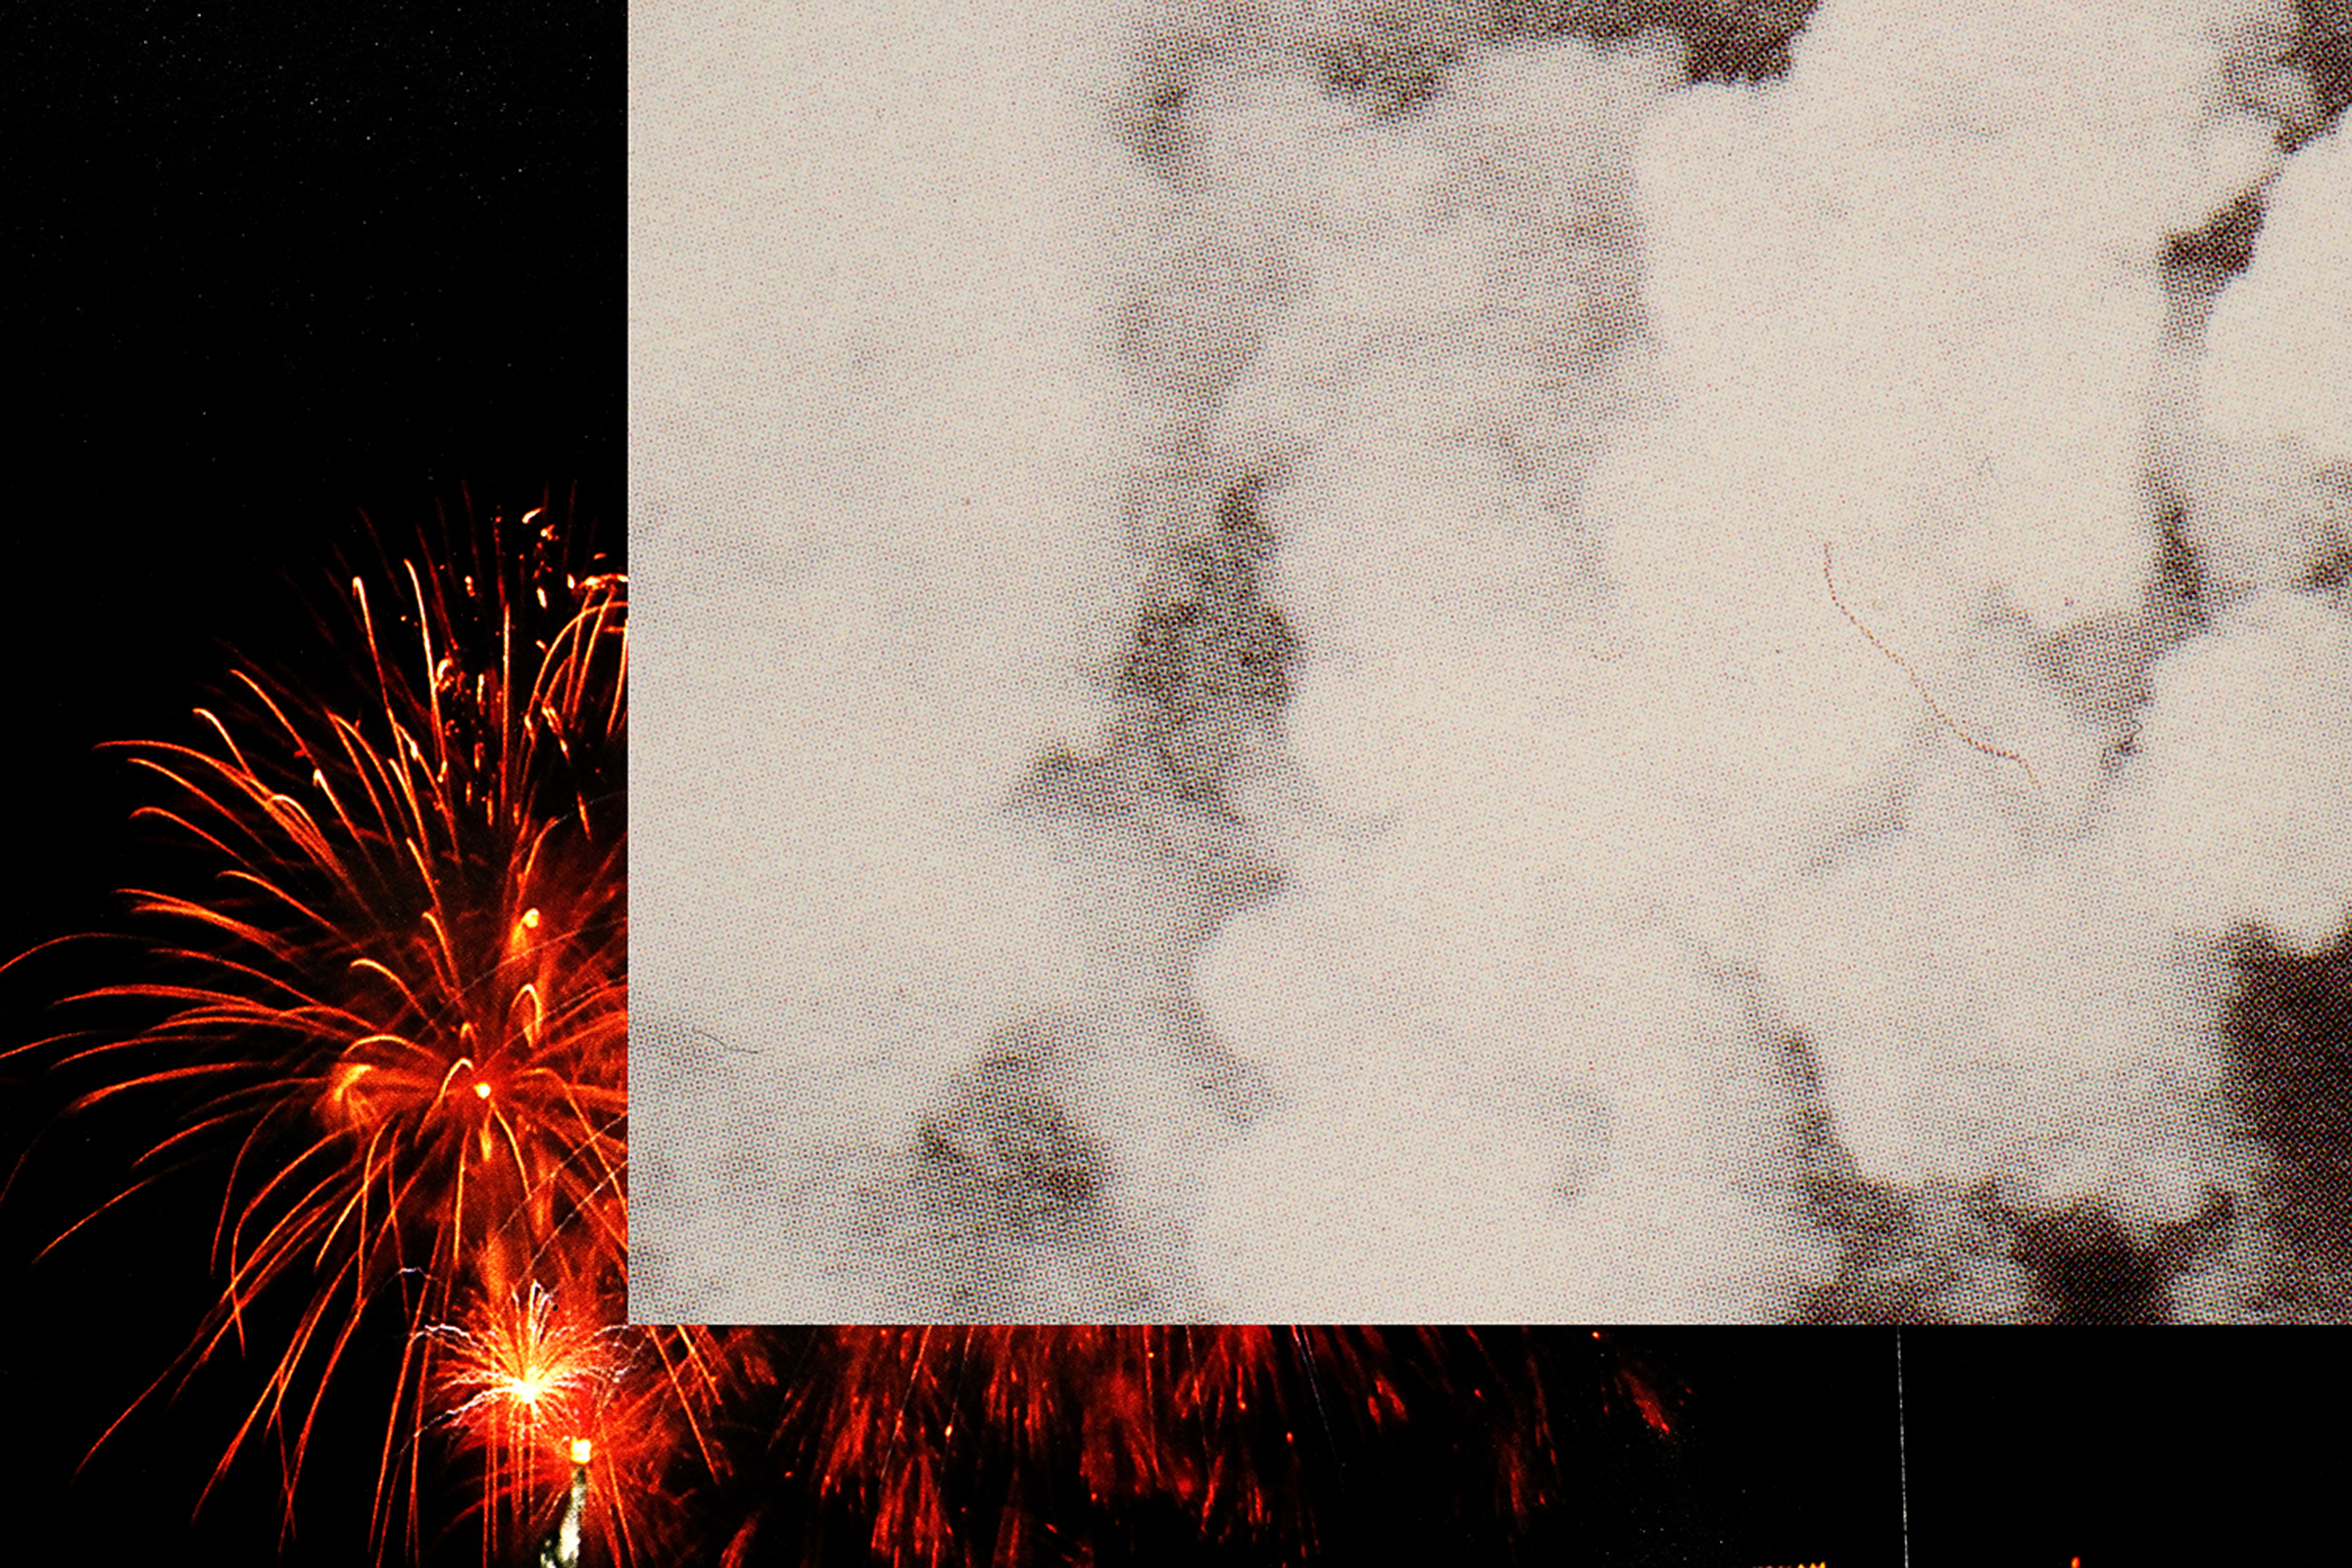   PABLO GUARDIOLA   Missed Fireworks 1 , 2013, digital c-print, edition of 3 + 2AP, 28" x 42" 